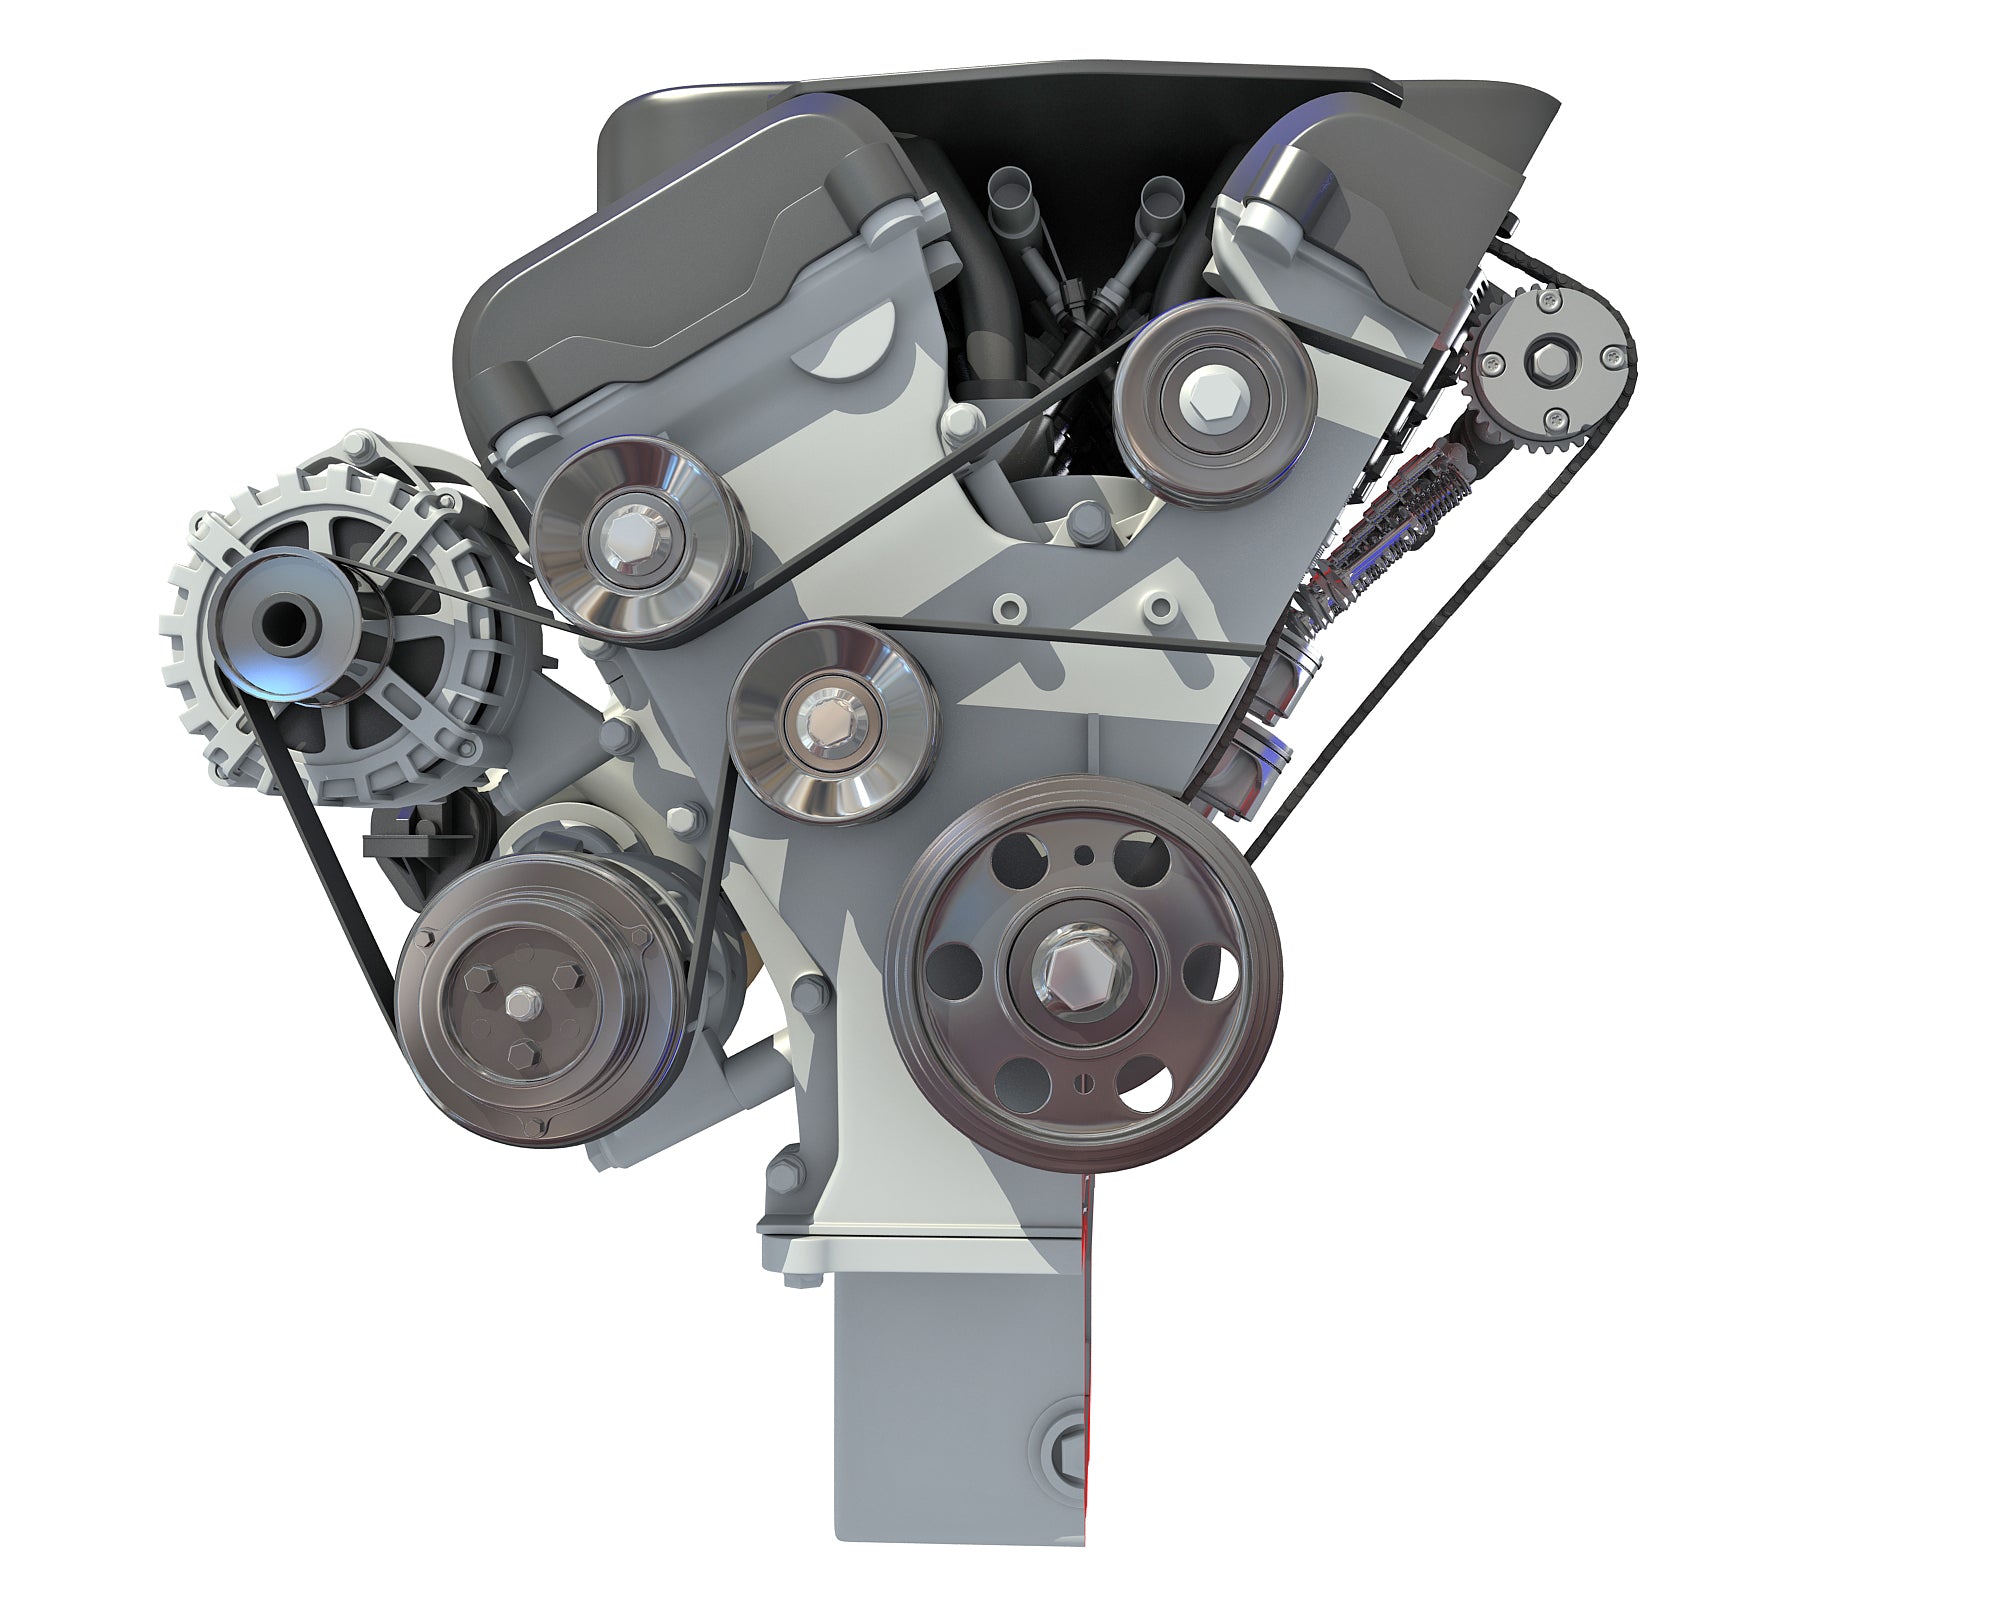 Cutaway Animated V12 Engine